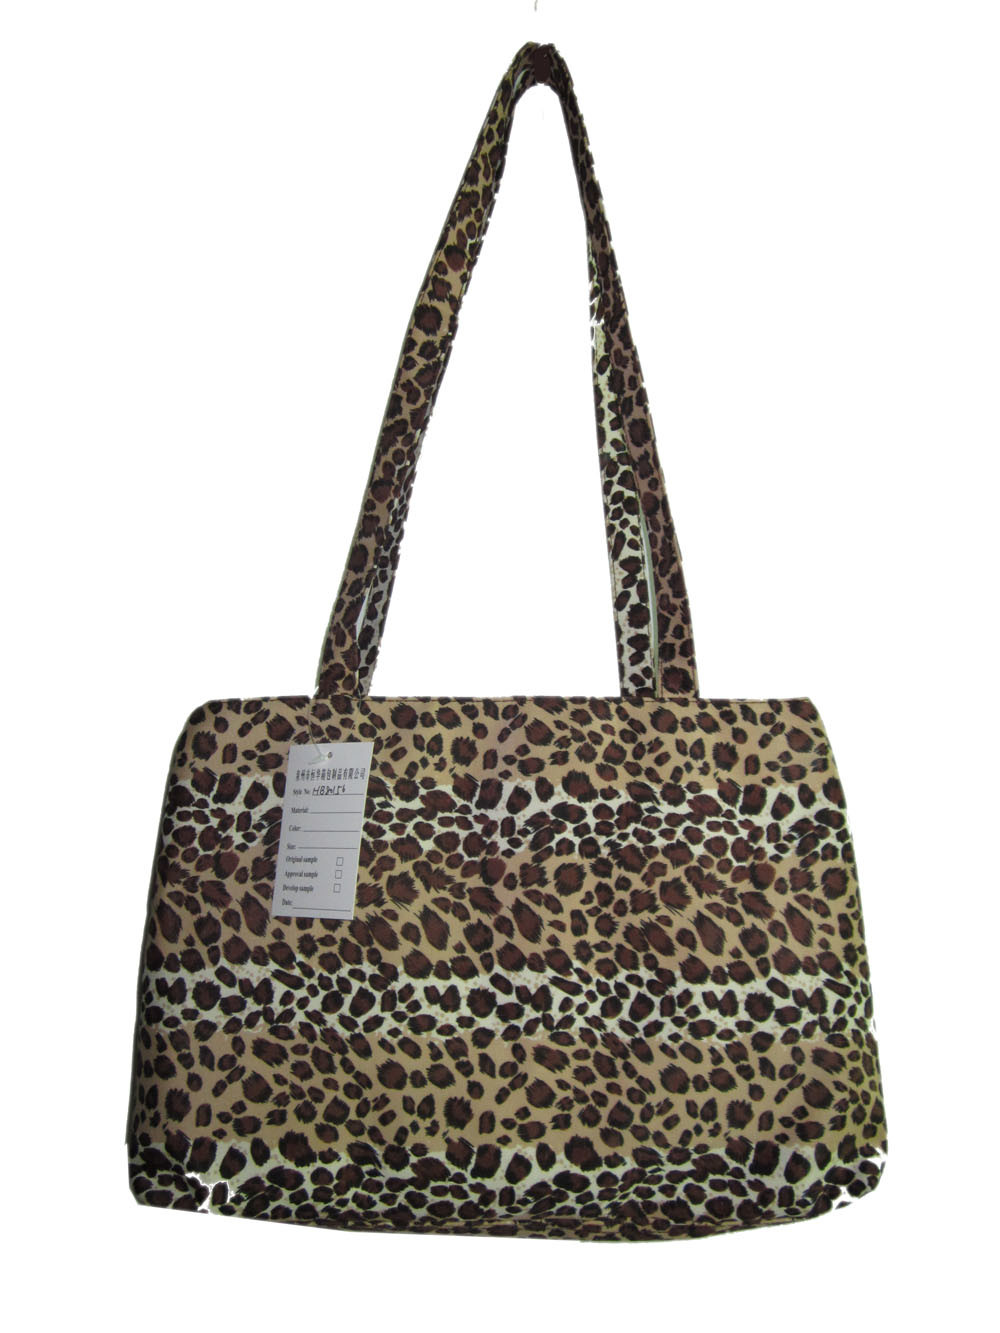 Handbag Lady's Bag Leisure Handbag (HB80156)